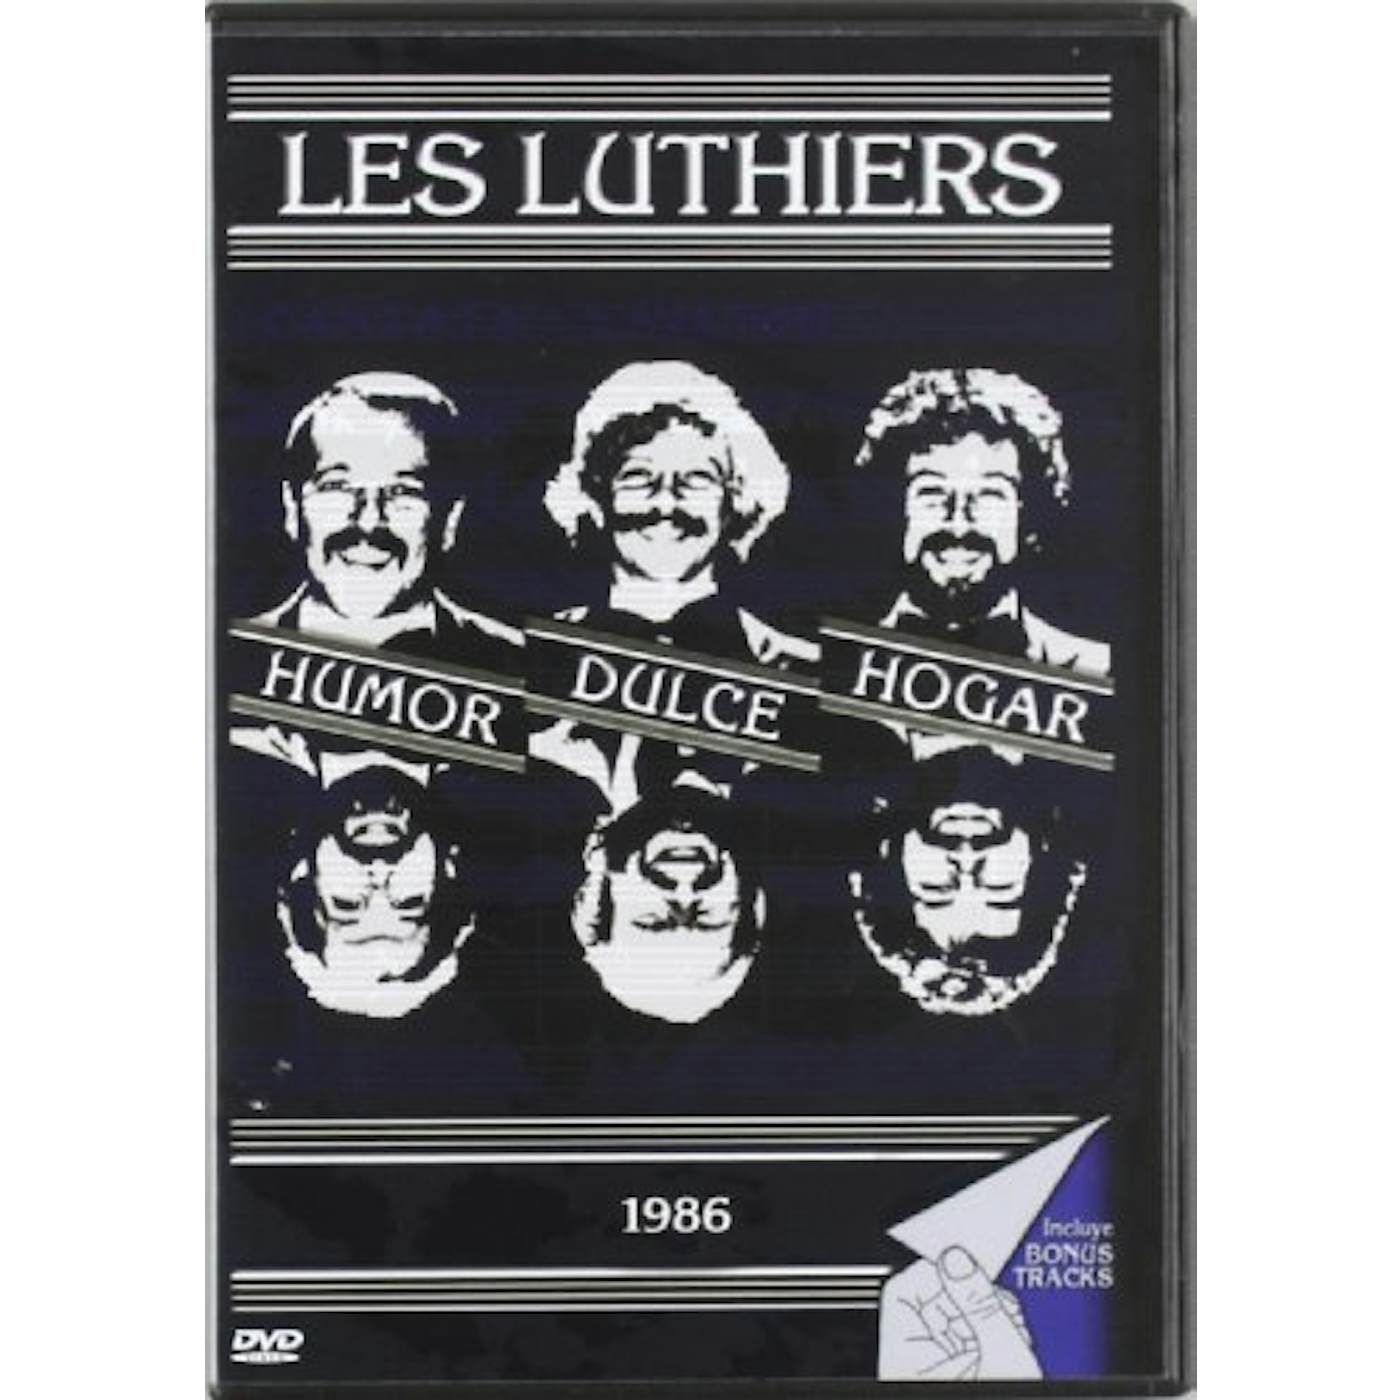 Les Luthiers HUMOR DULCE HOGAR (6) DVD